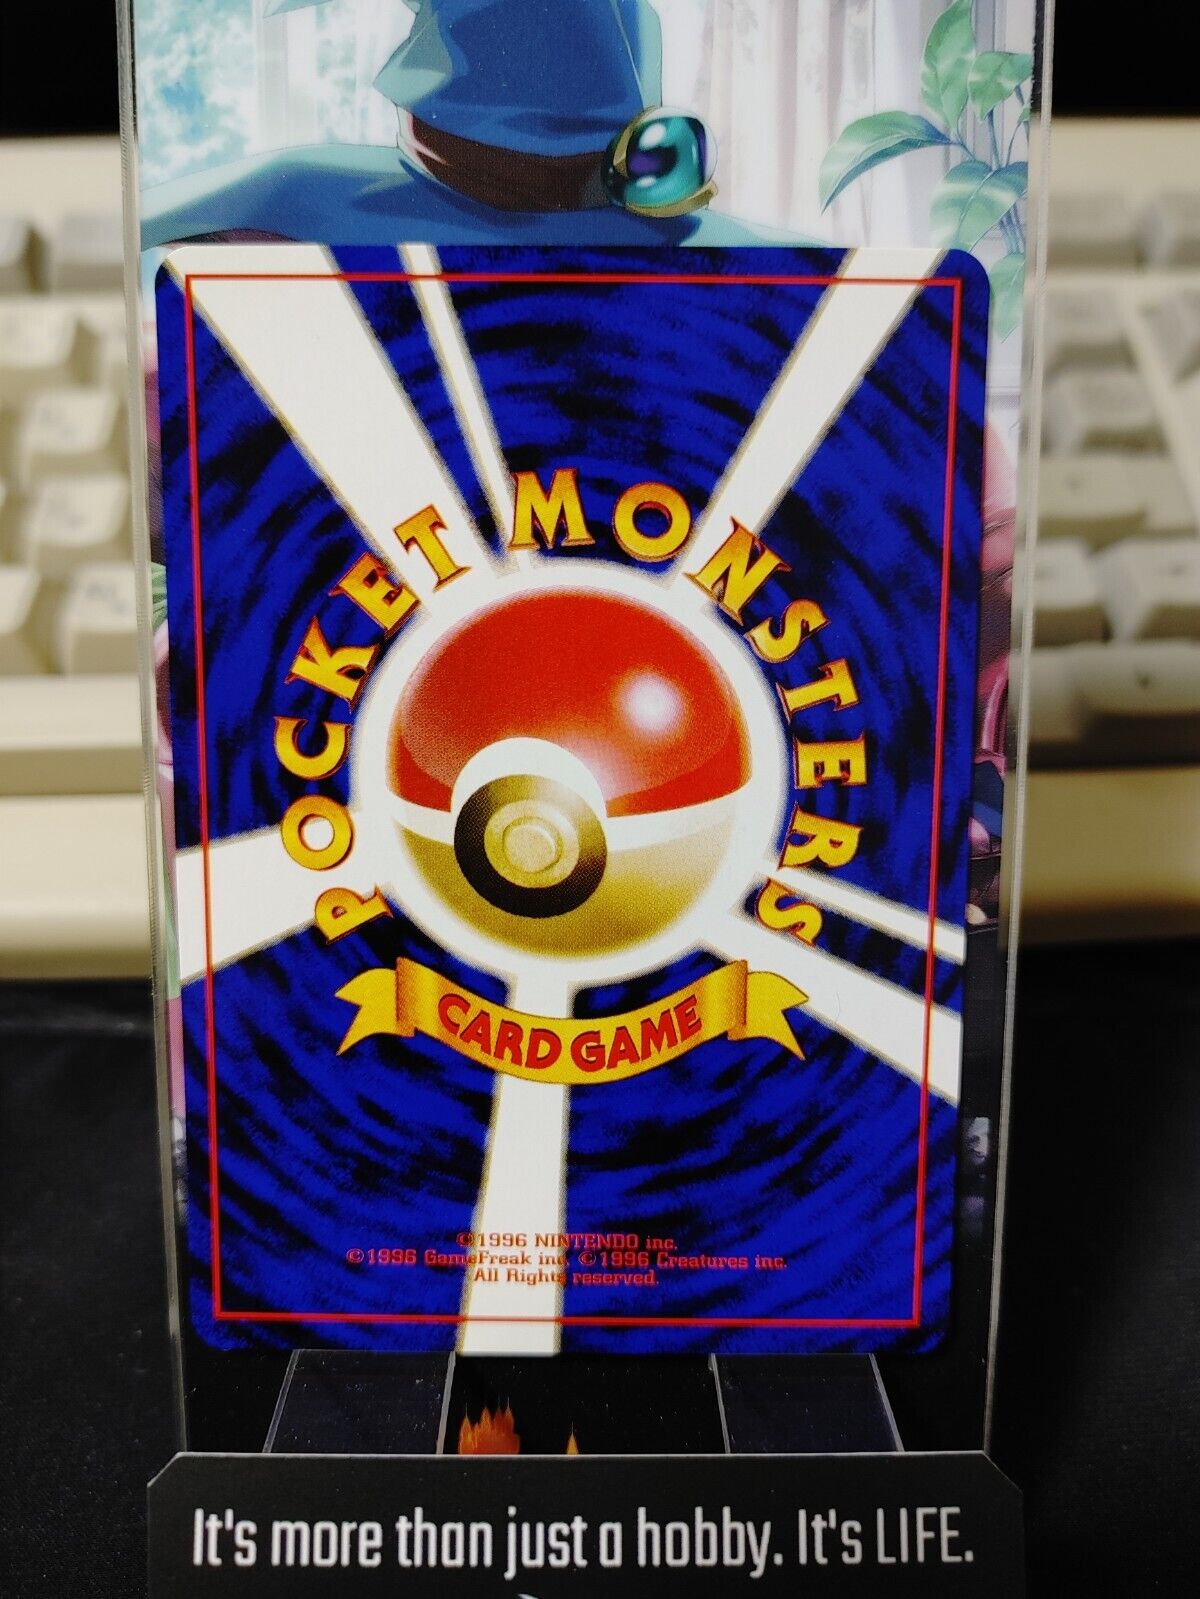 Misty's Seaking Pokemon 118 Japanese Vintage TCG Card Japan Original Release